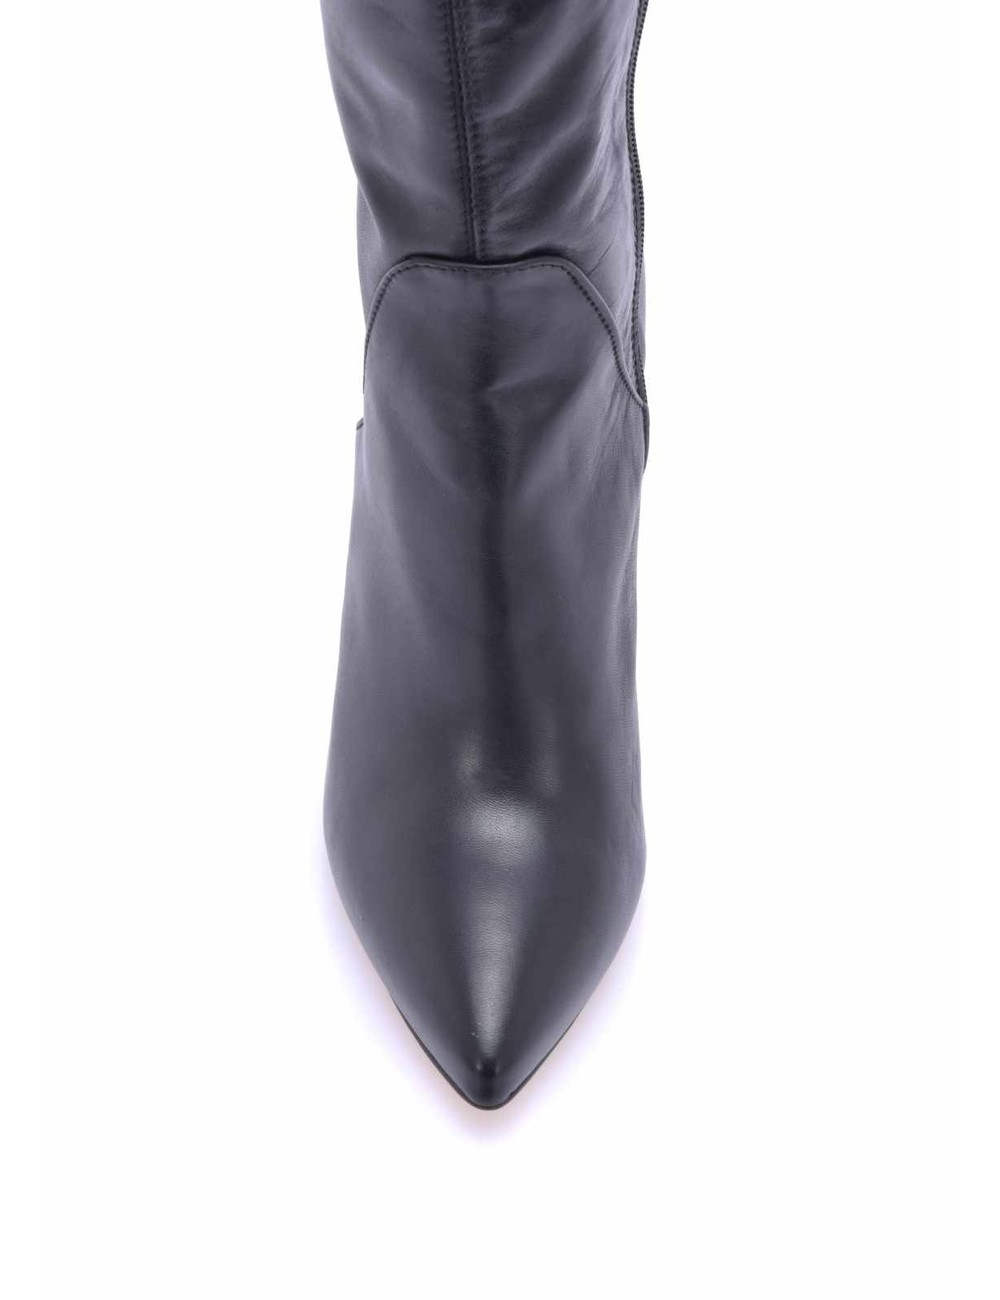 Sanctum  High Italian THIGH boots VESTA-10 with stiletto heels in genuine leather